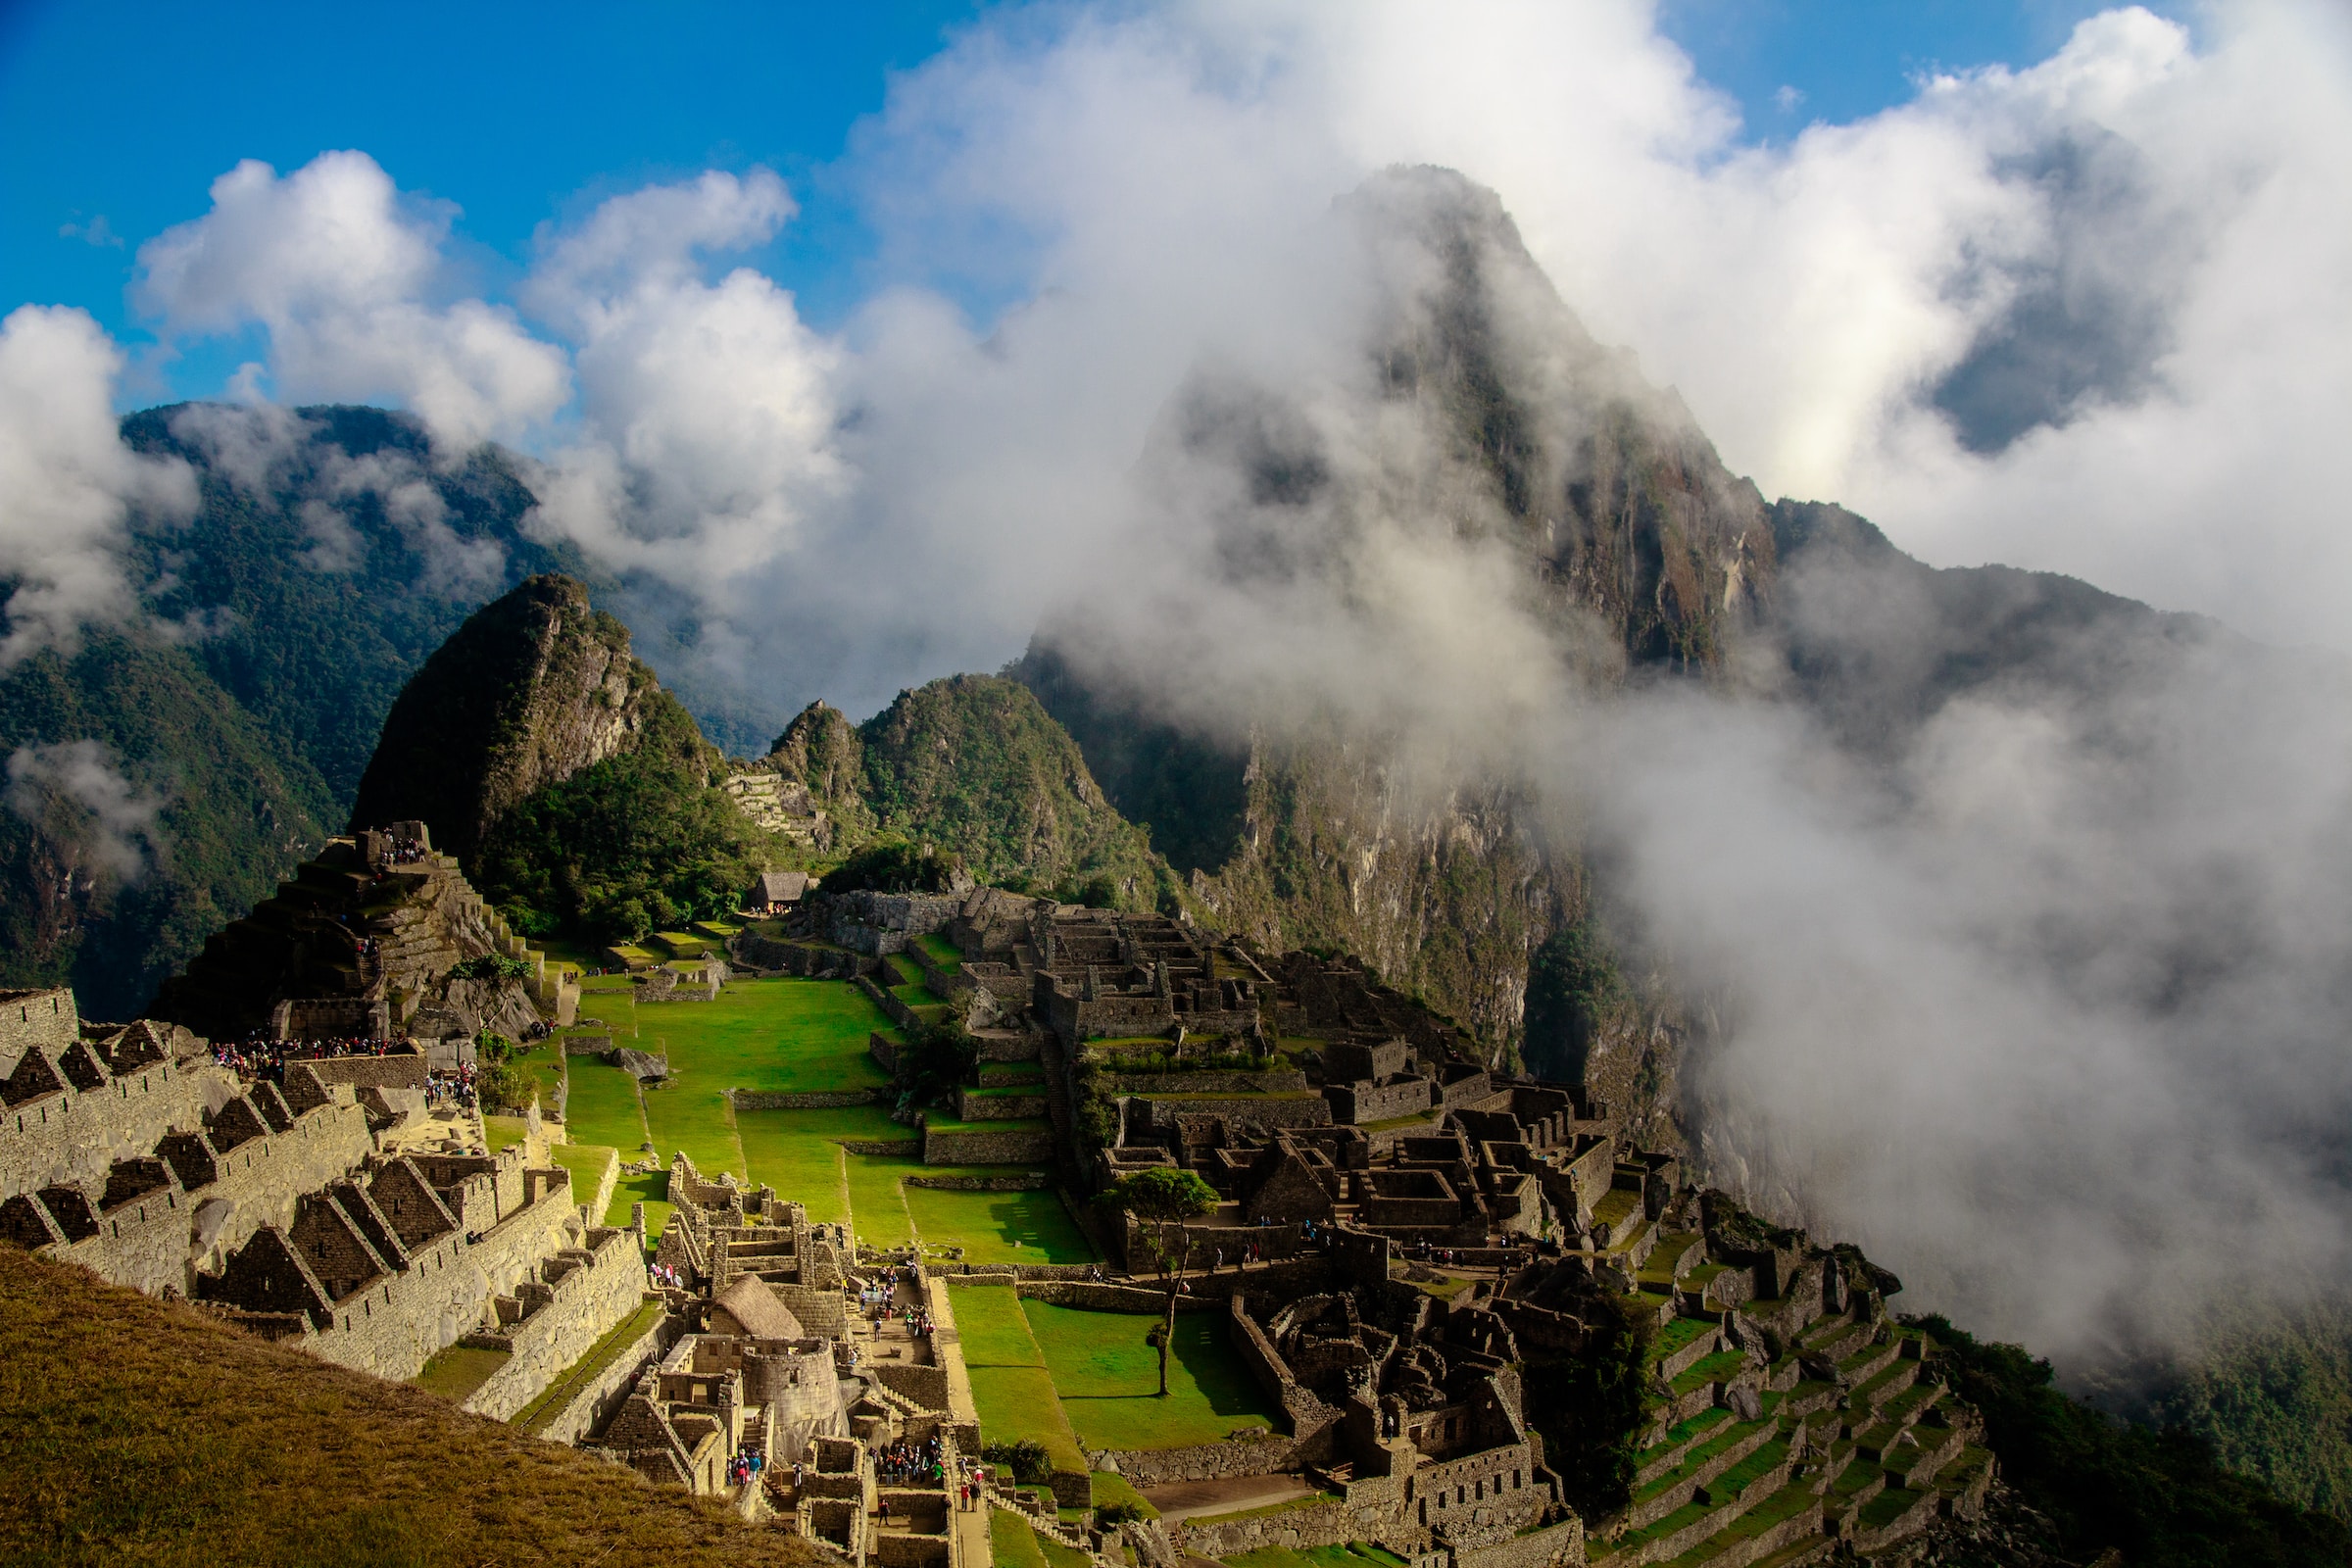 A misty morning in Machu Picchu. Photo by Scott Umstattd